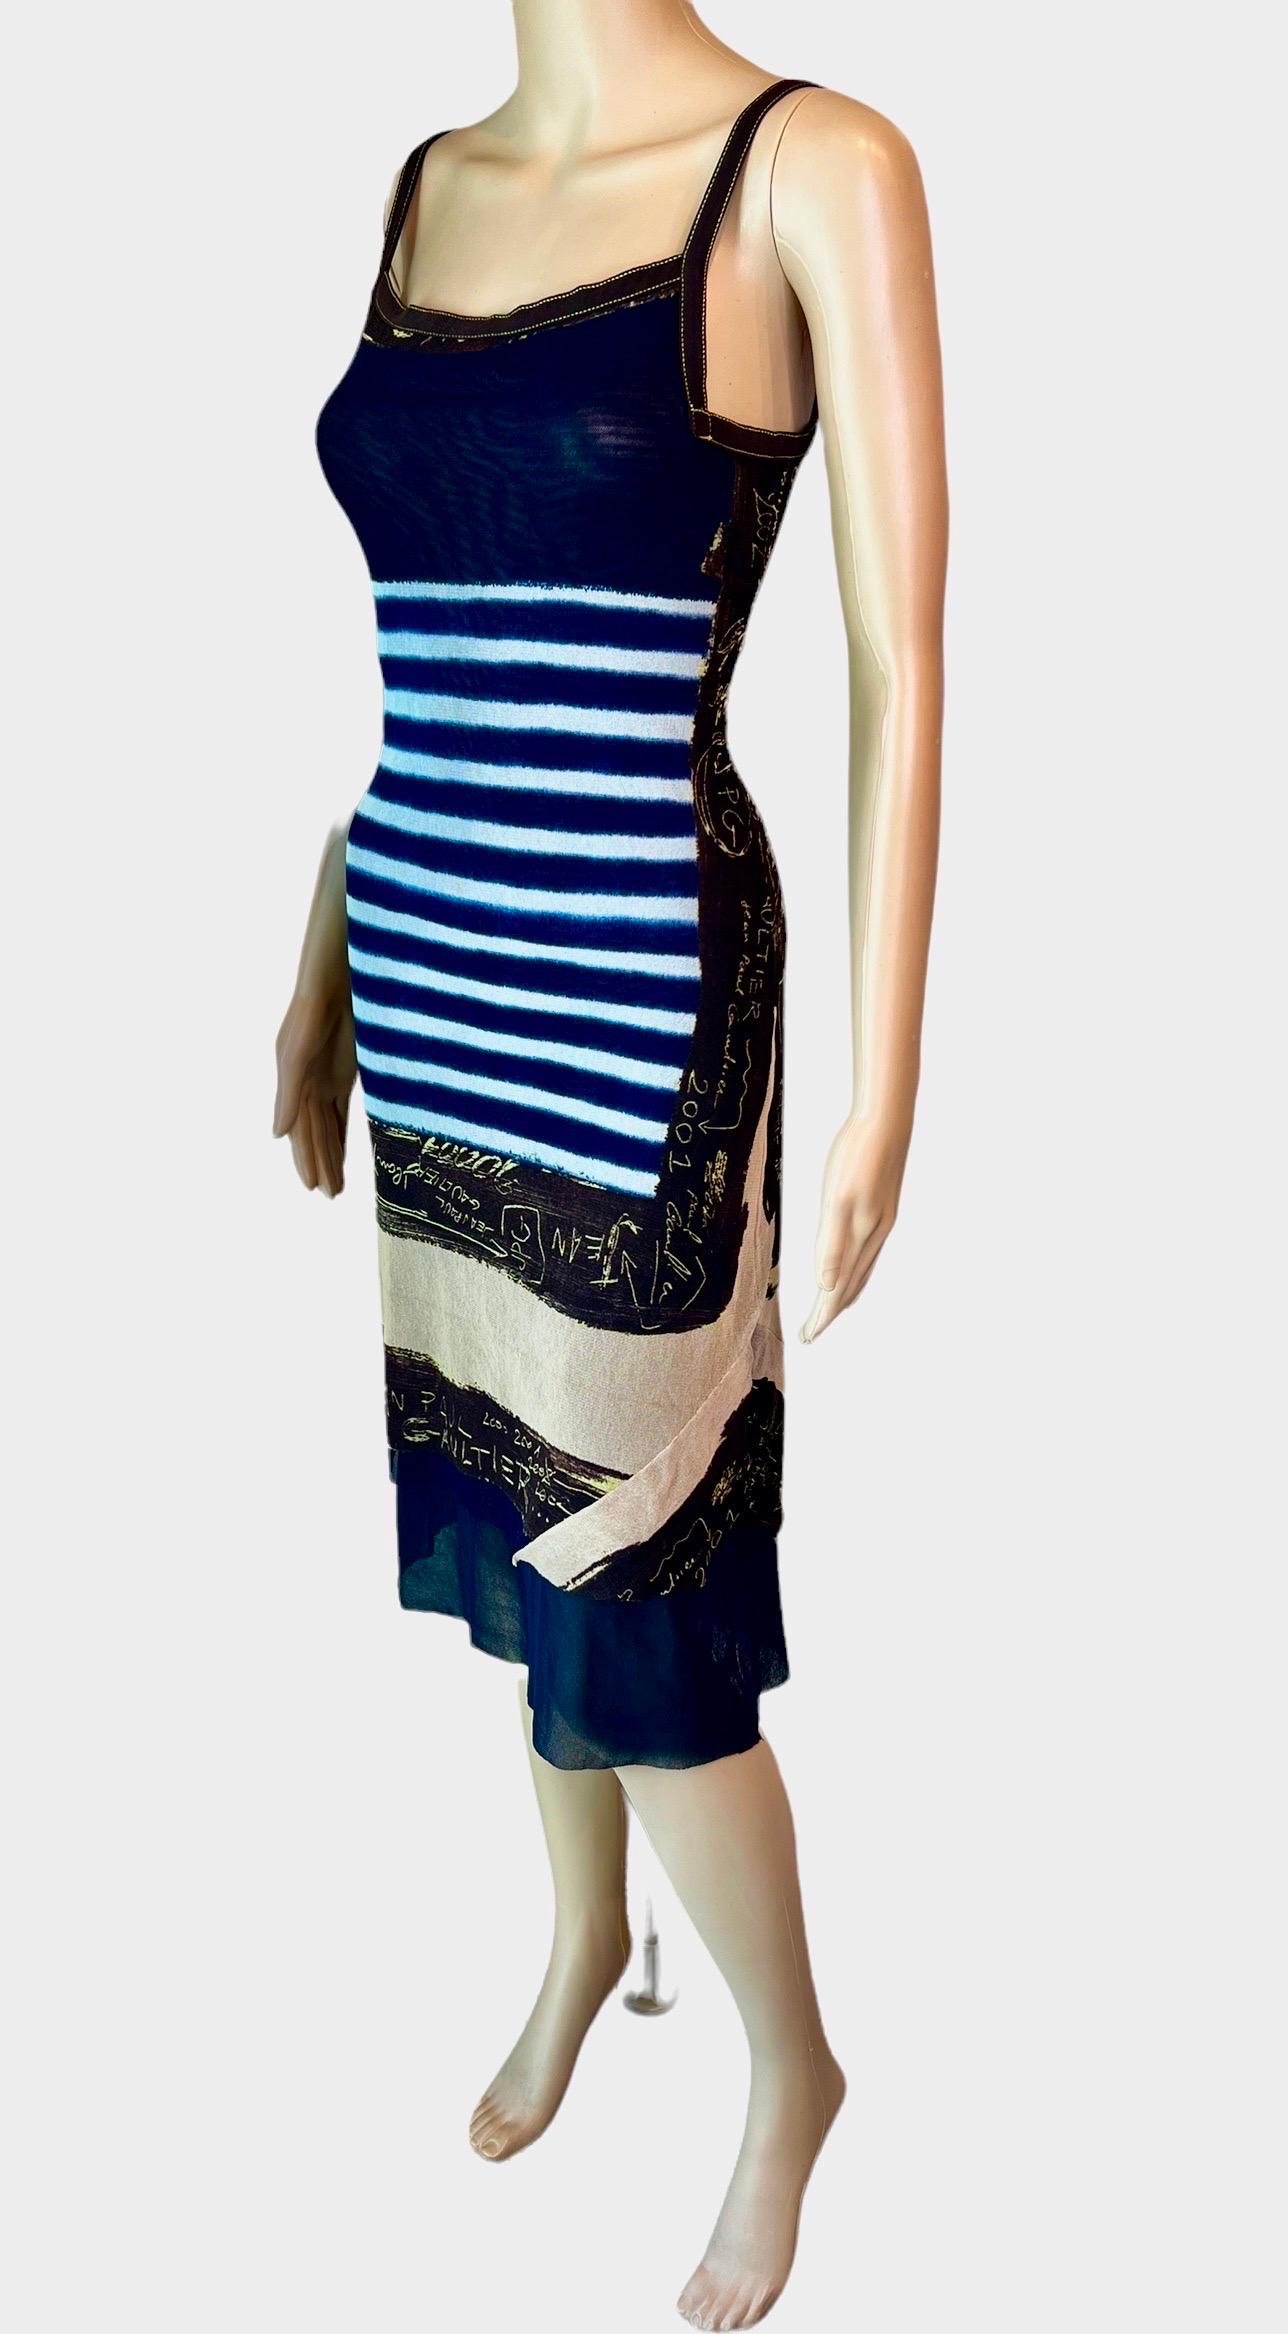 Jean Paul Gaultier c.2001 Graffiti Stripes Print Mesh Dress In Good Condition For Sale In Naples, FL